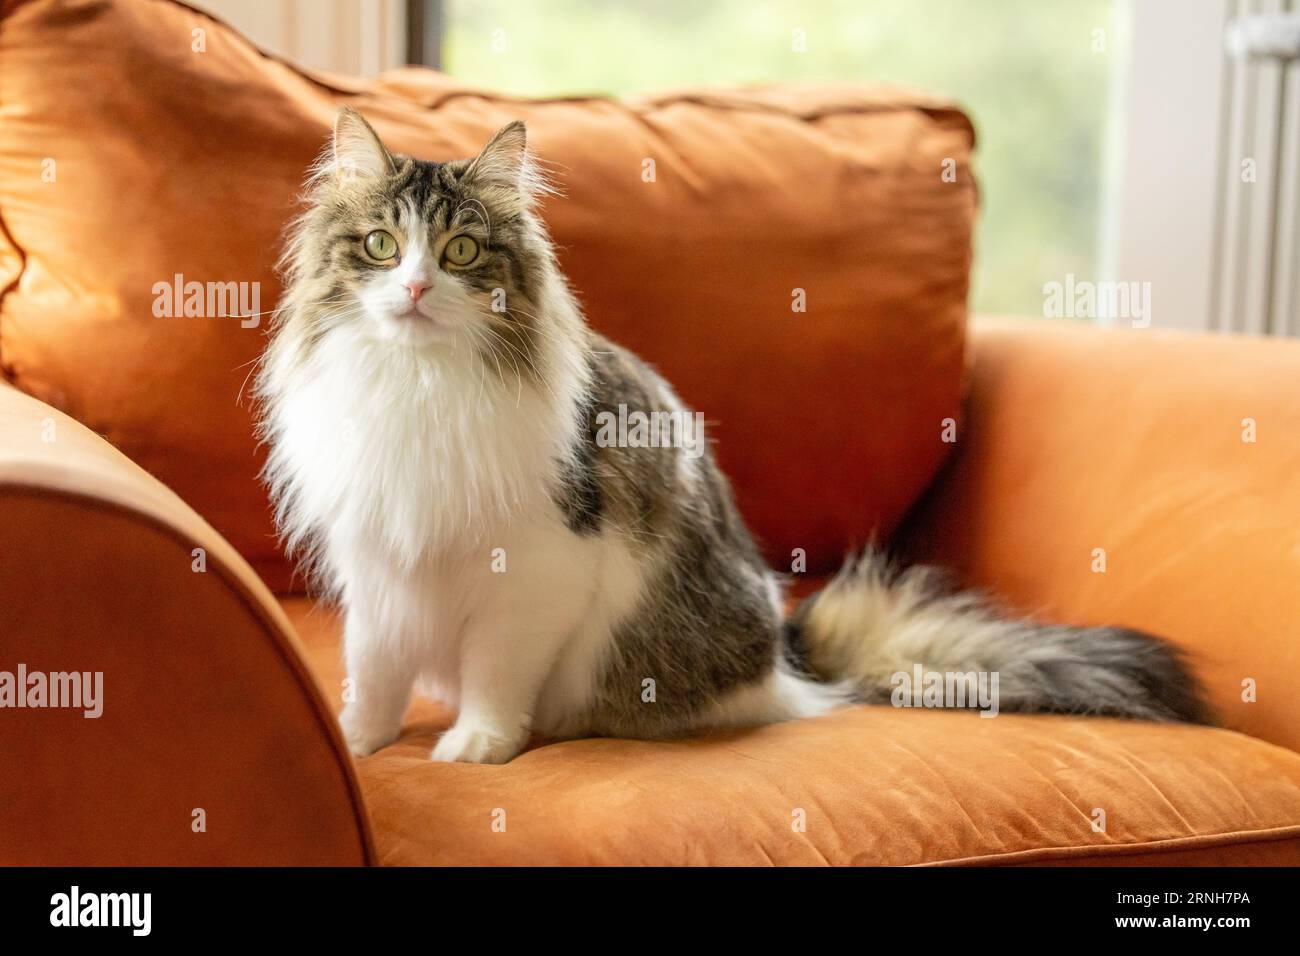 A longhaired tabby cat sits on an orange armchair Stock Photo